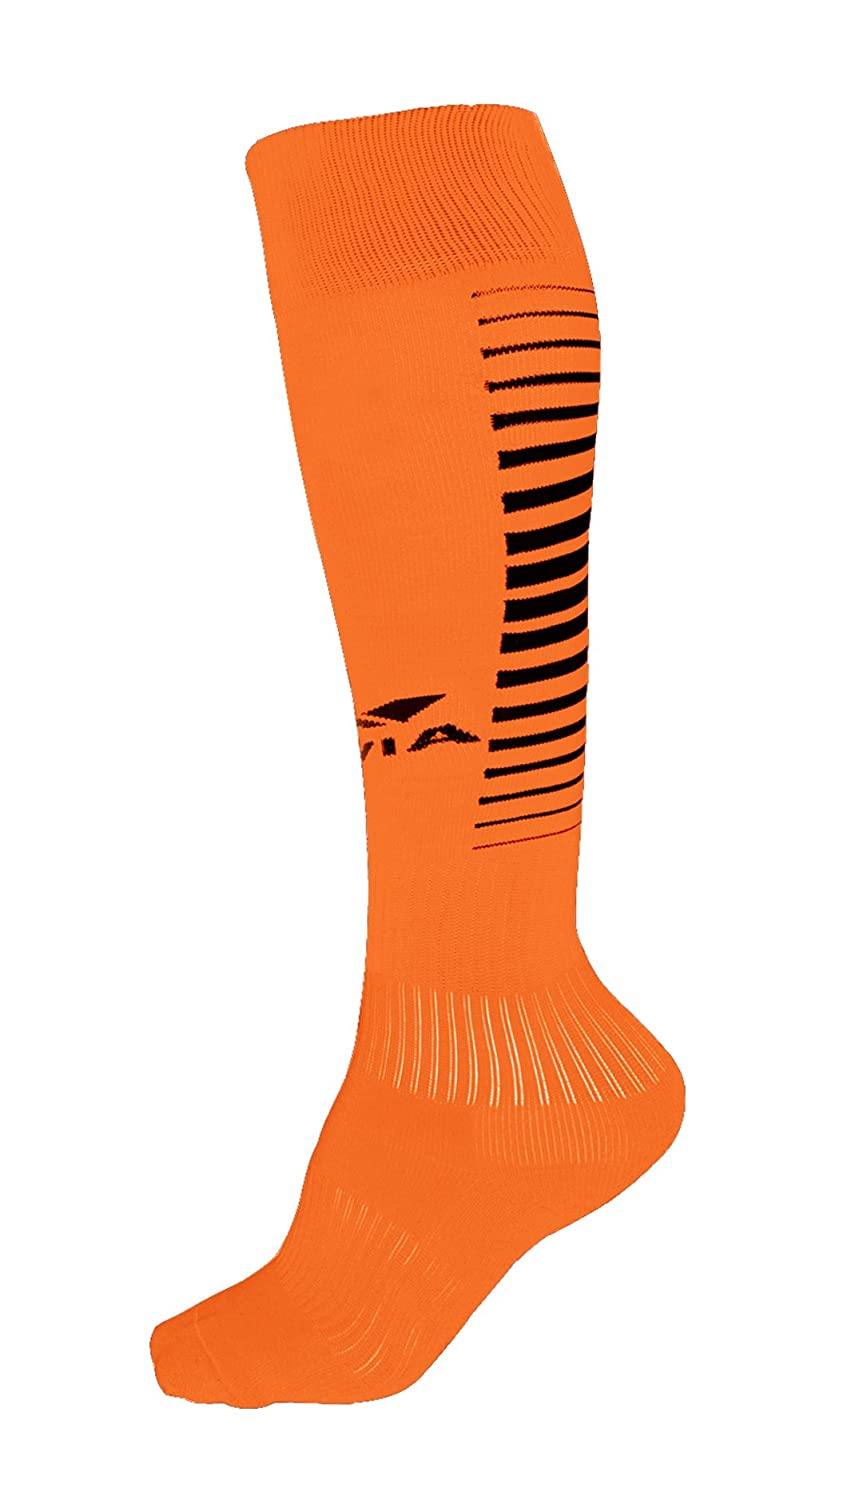 Nivia Encounter Football Socks - Orange/Black - Best Price online Prokicksports.com